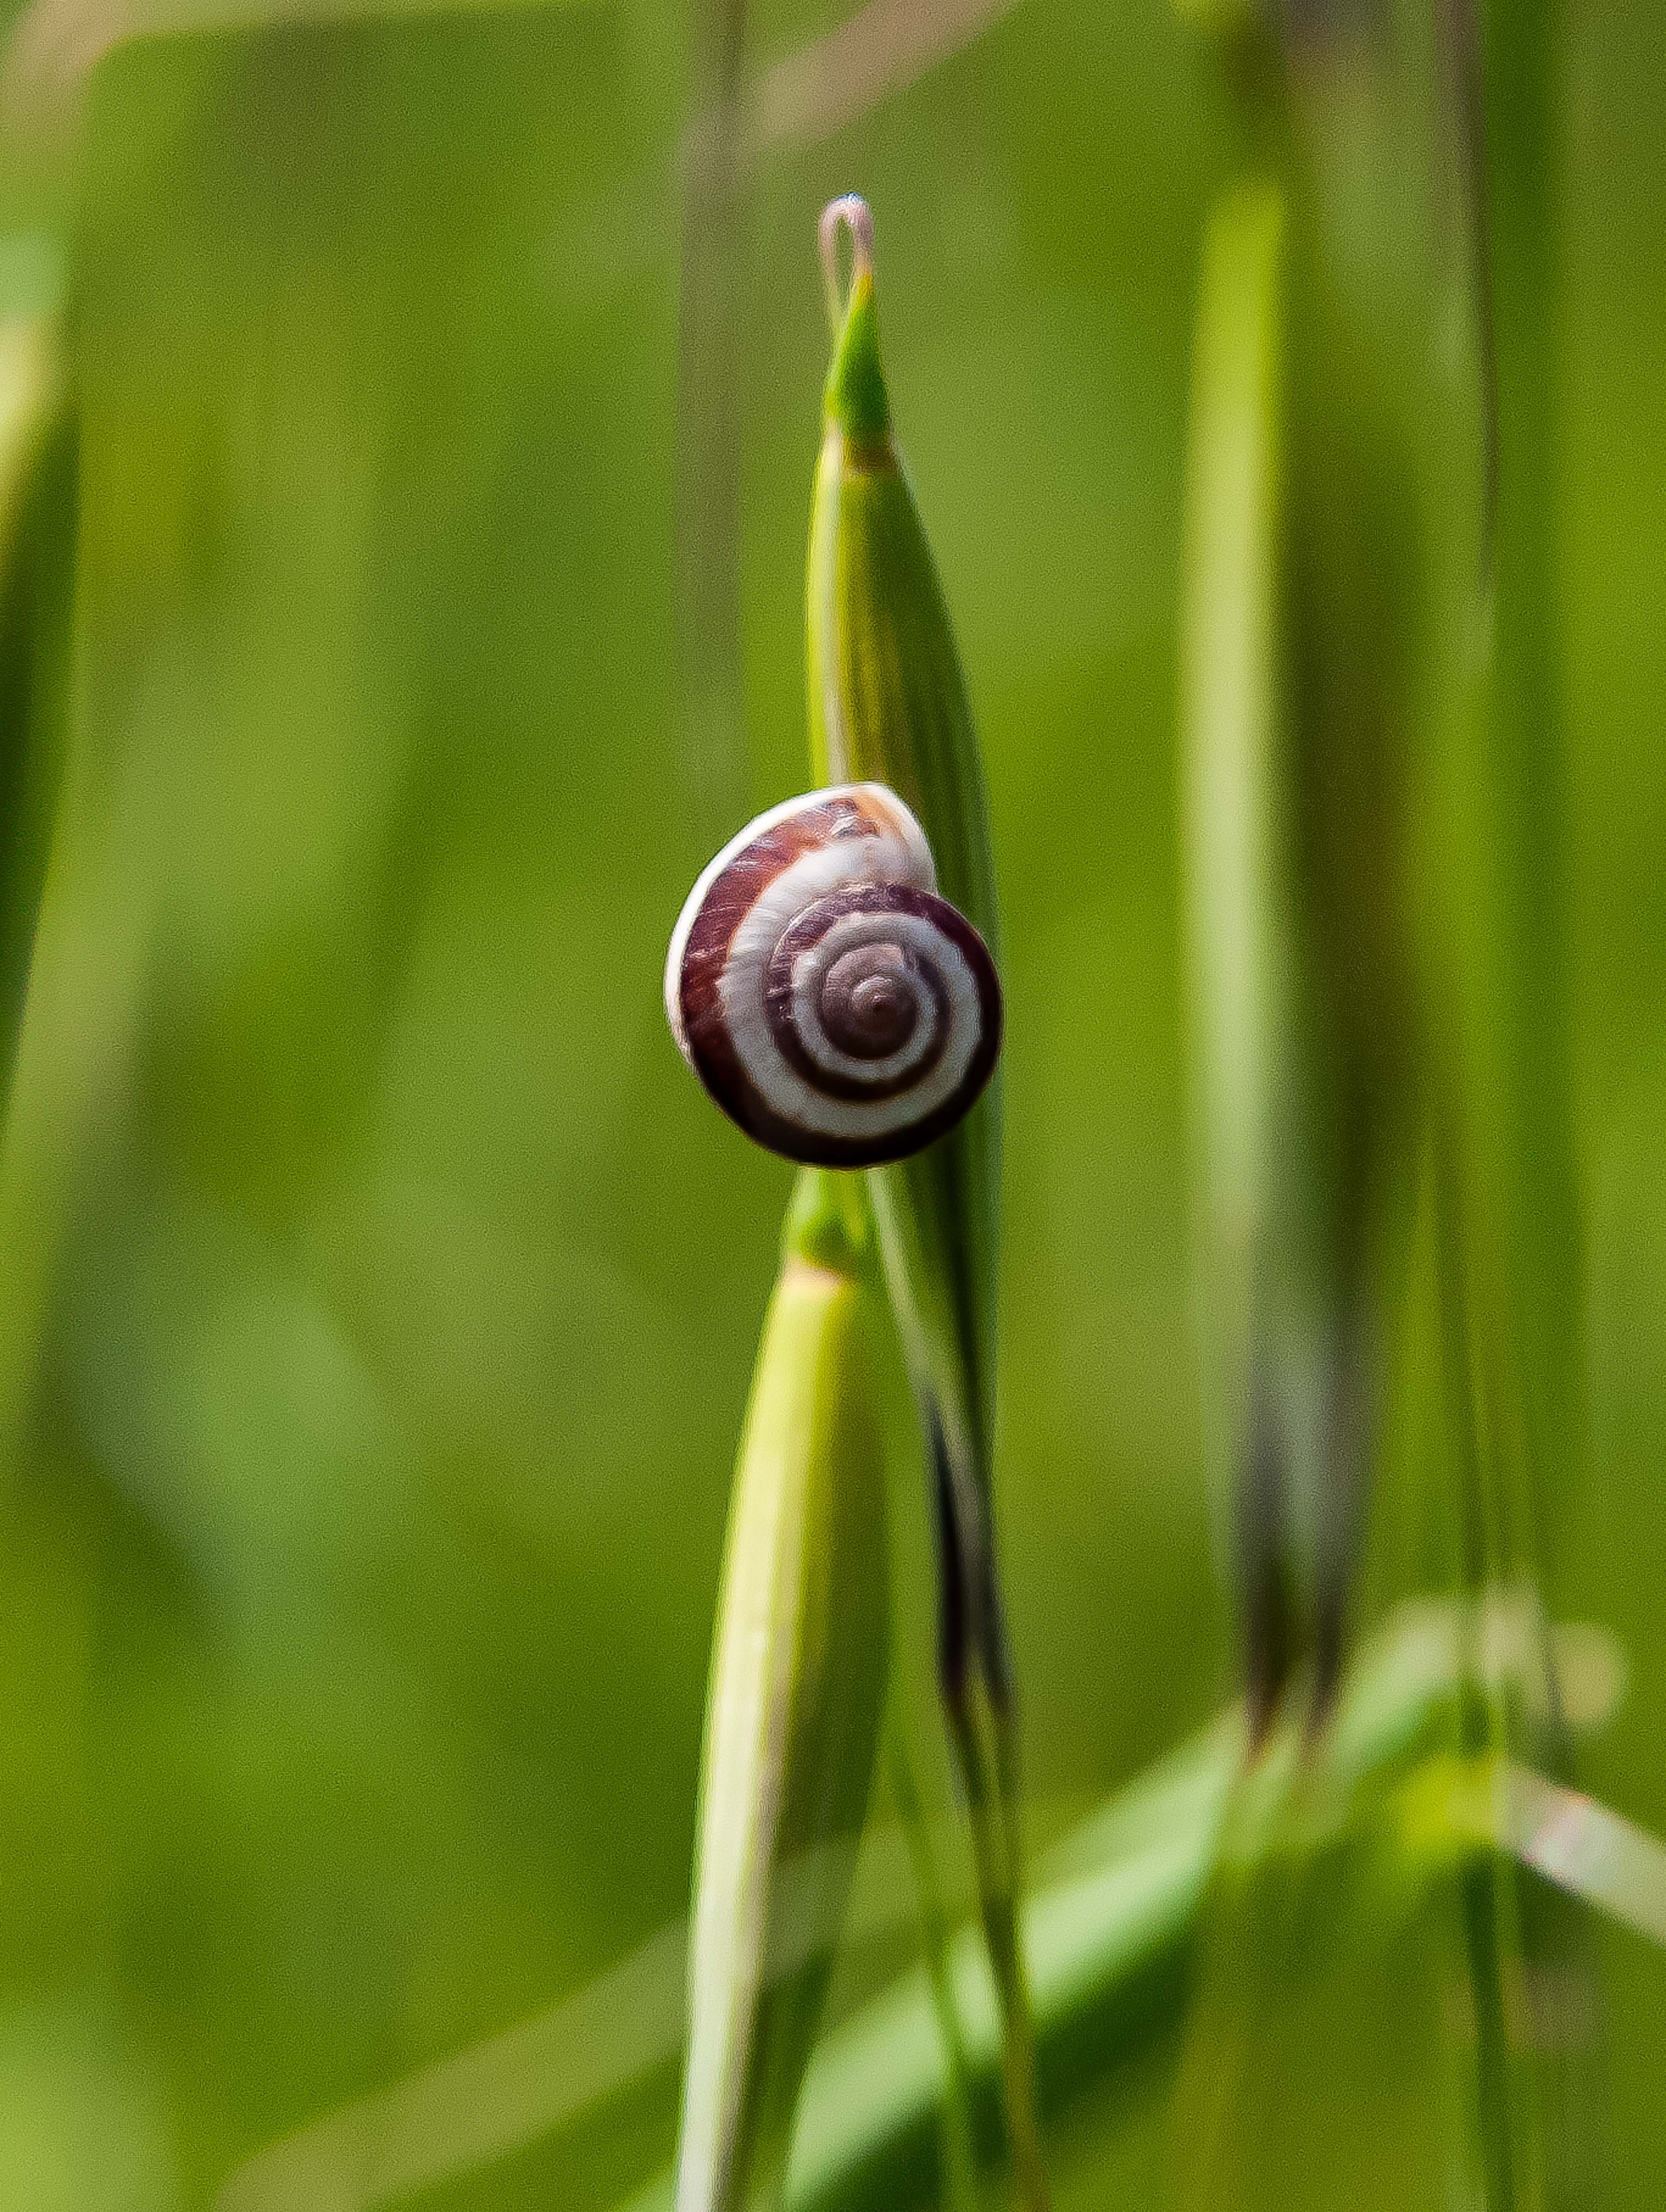 Slovenia, Obcina Piran, Snail On Grass Stalk, 2006